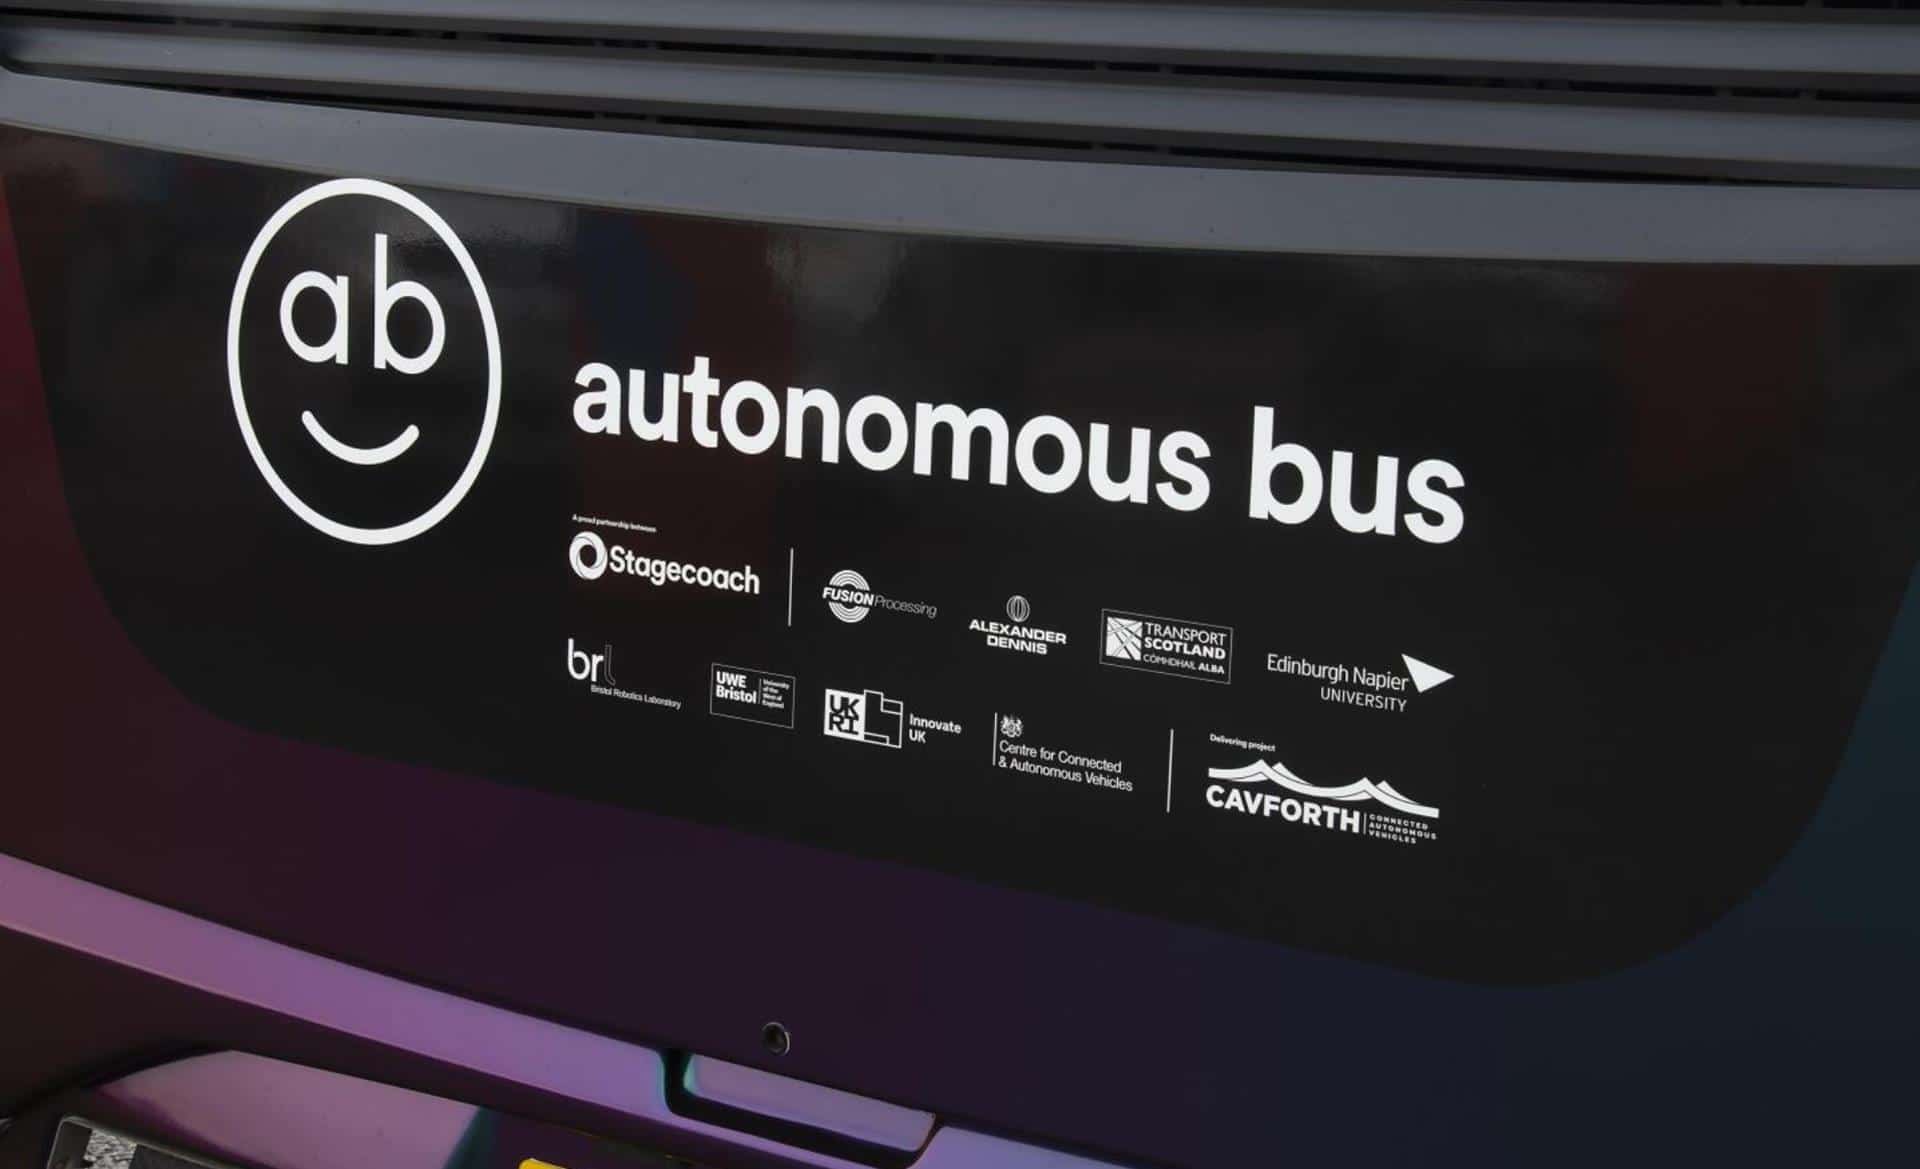 First tests of the Dennis Enviro200 autonomous passenger bus